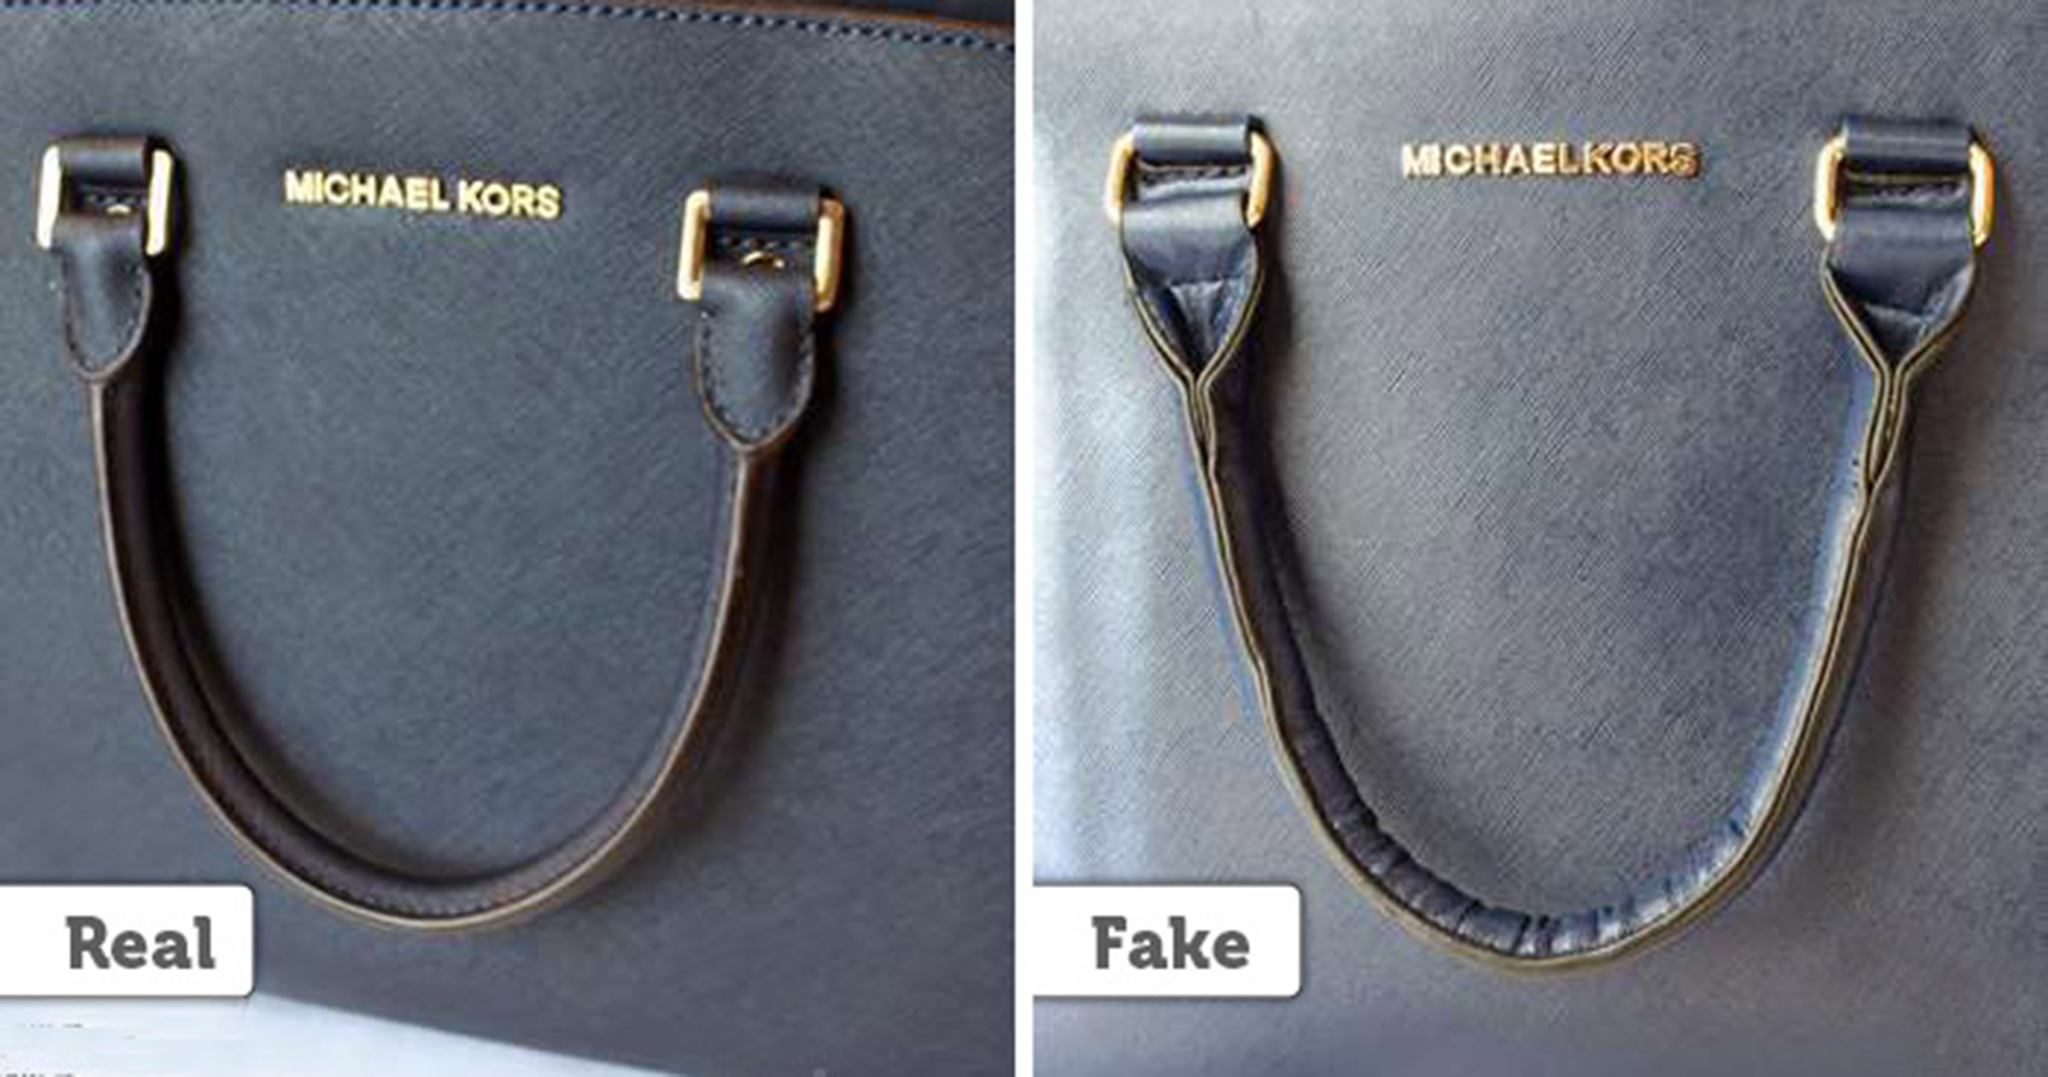 apt Ubevæbnet på Identify Real Michael Kors Bag With Fake One – Gymbuddy Now